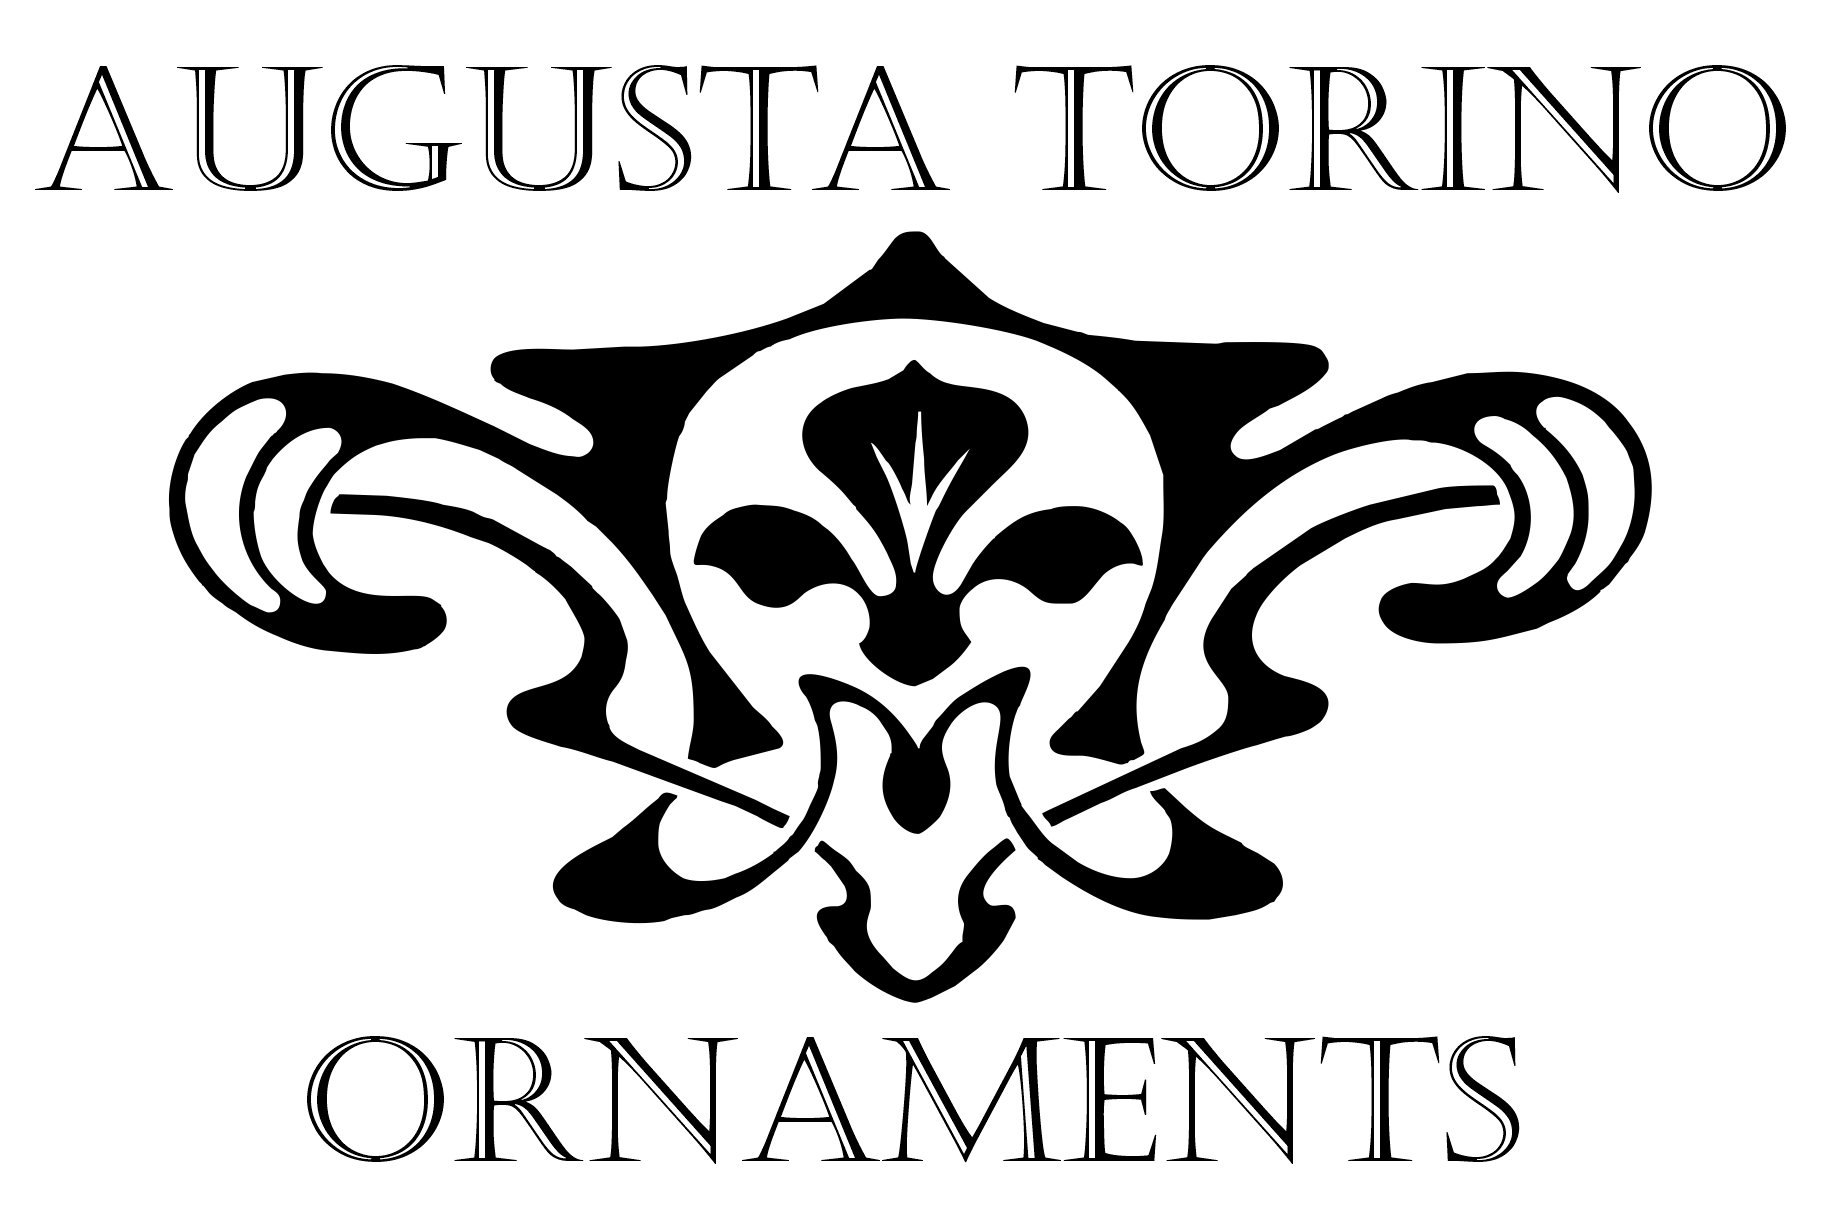 Augusta Torino Ornaments preview image.